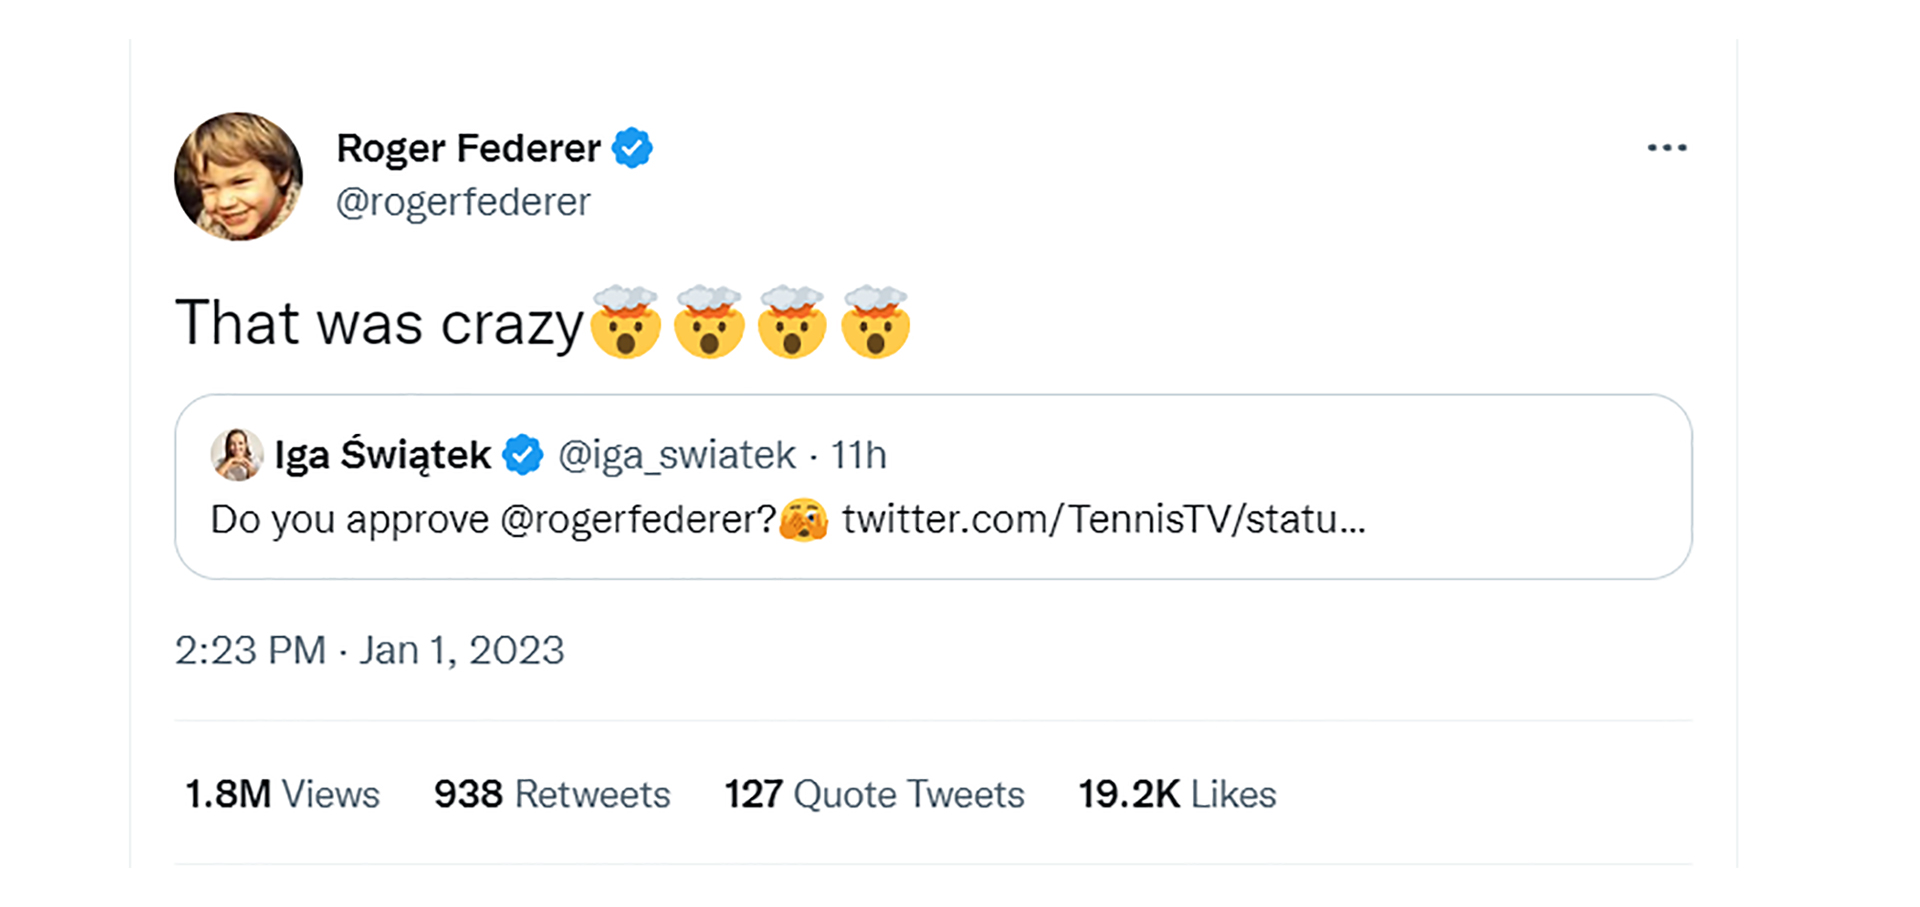 "that was crazy"praised Federer